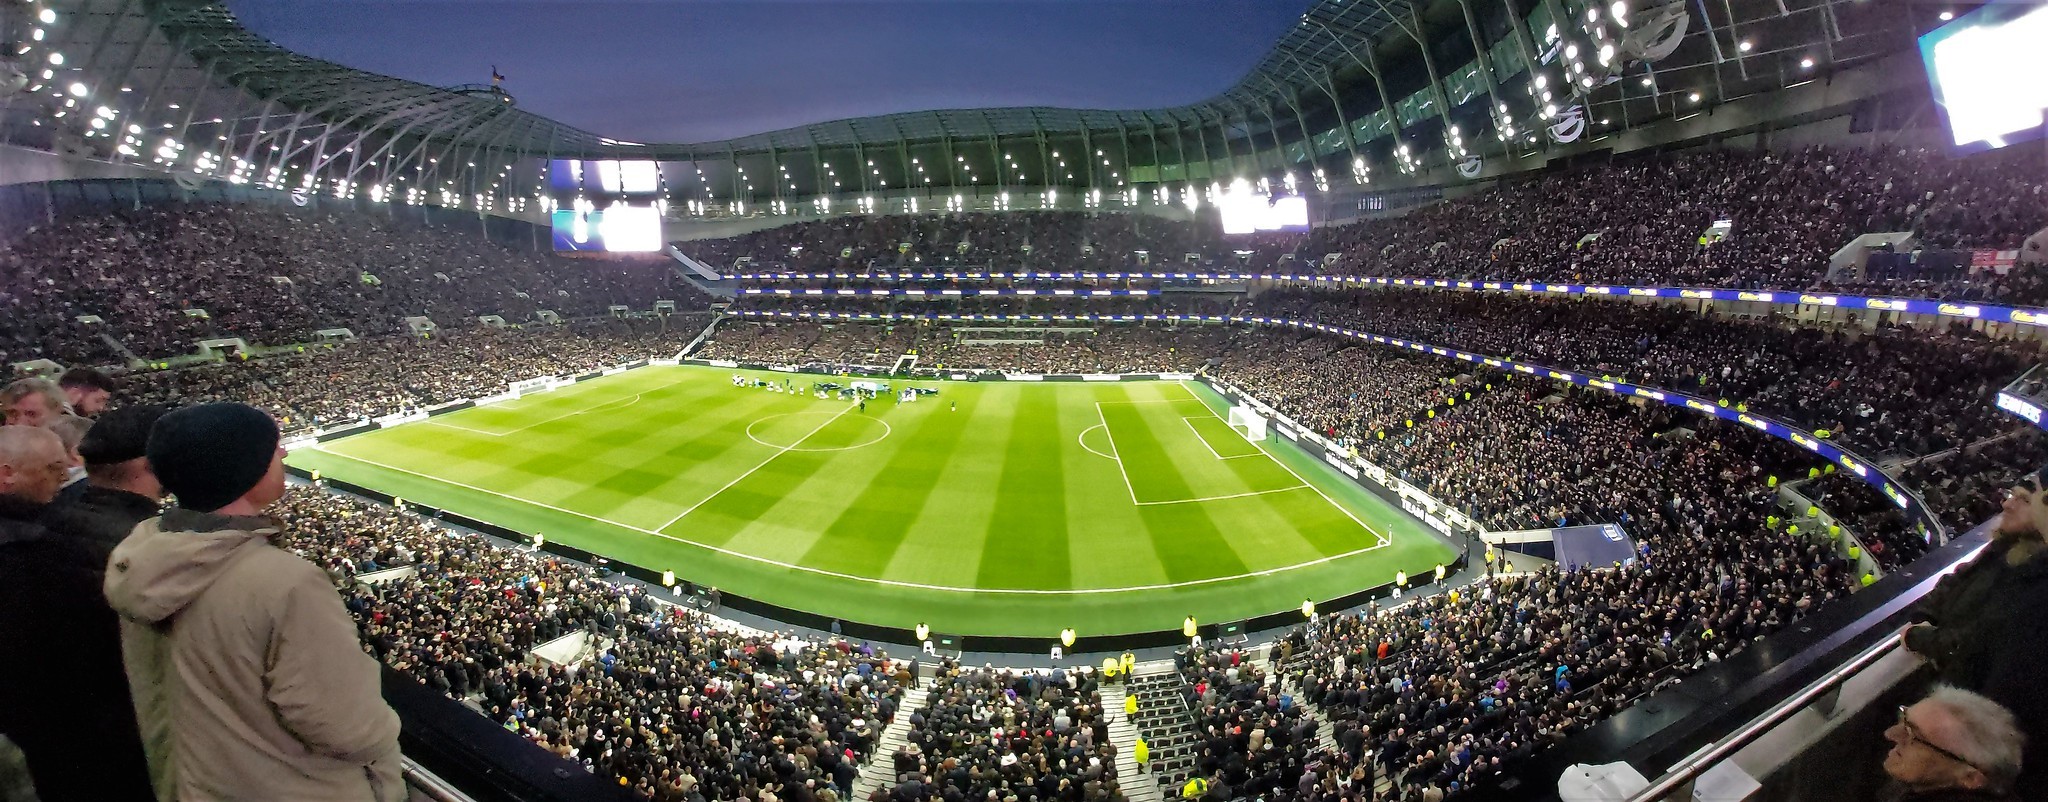 Tottenham Hotspur Stadium - StadiumDB.com